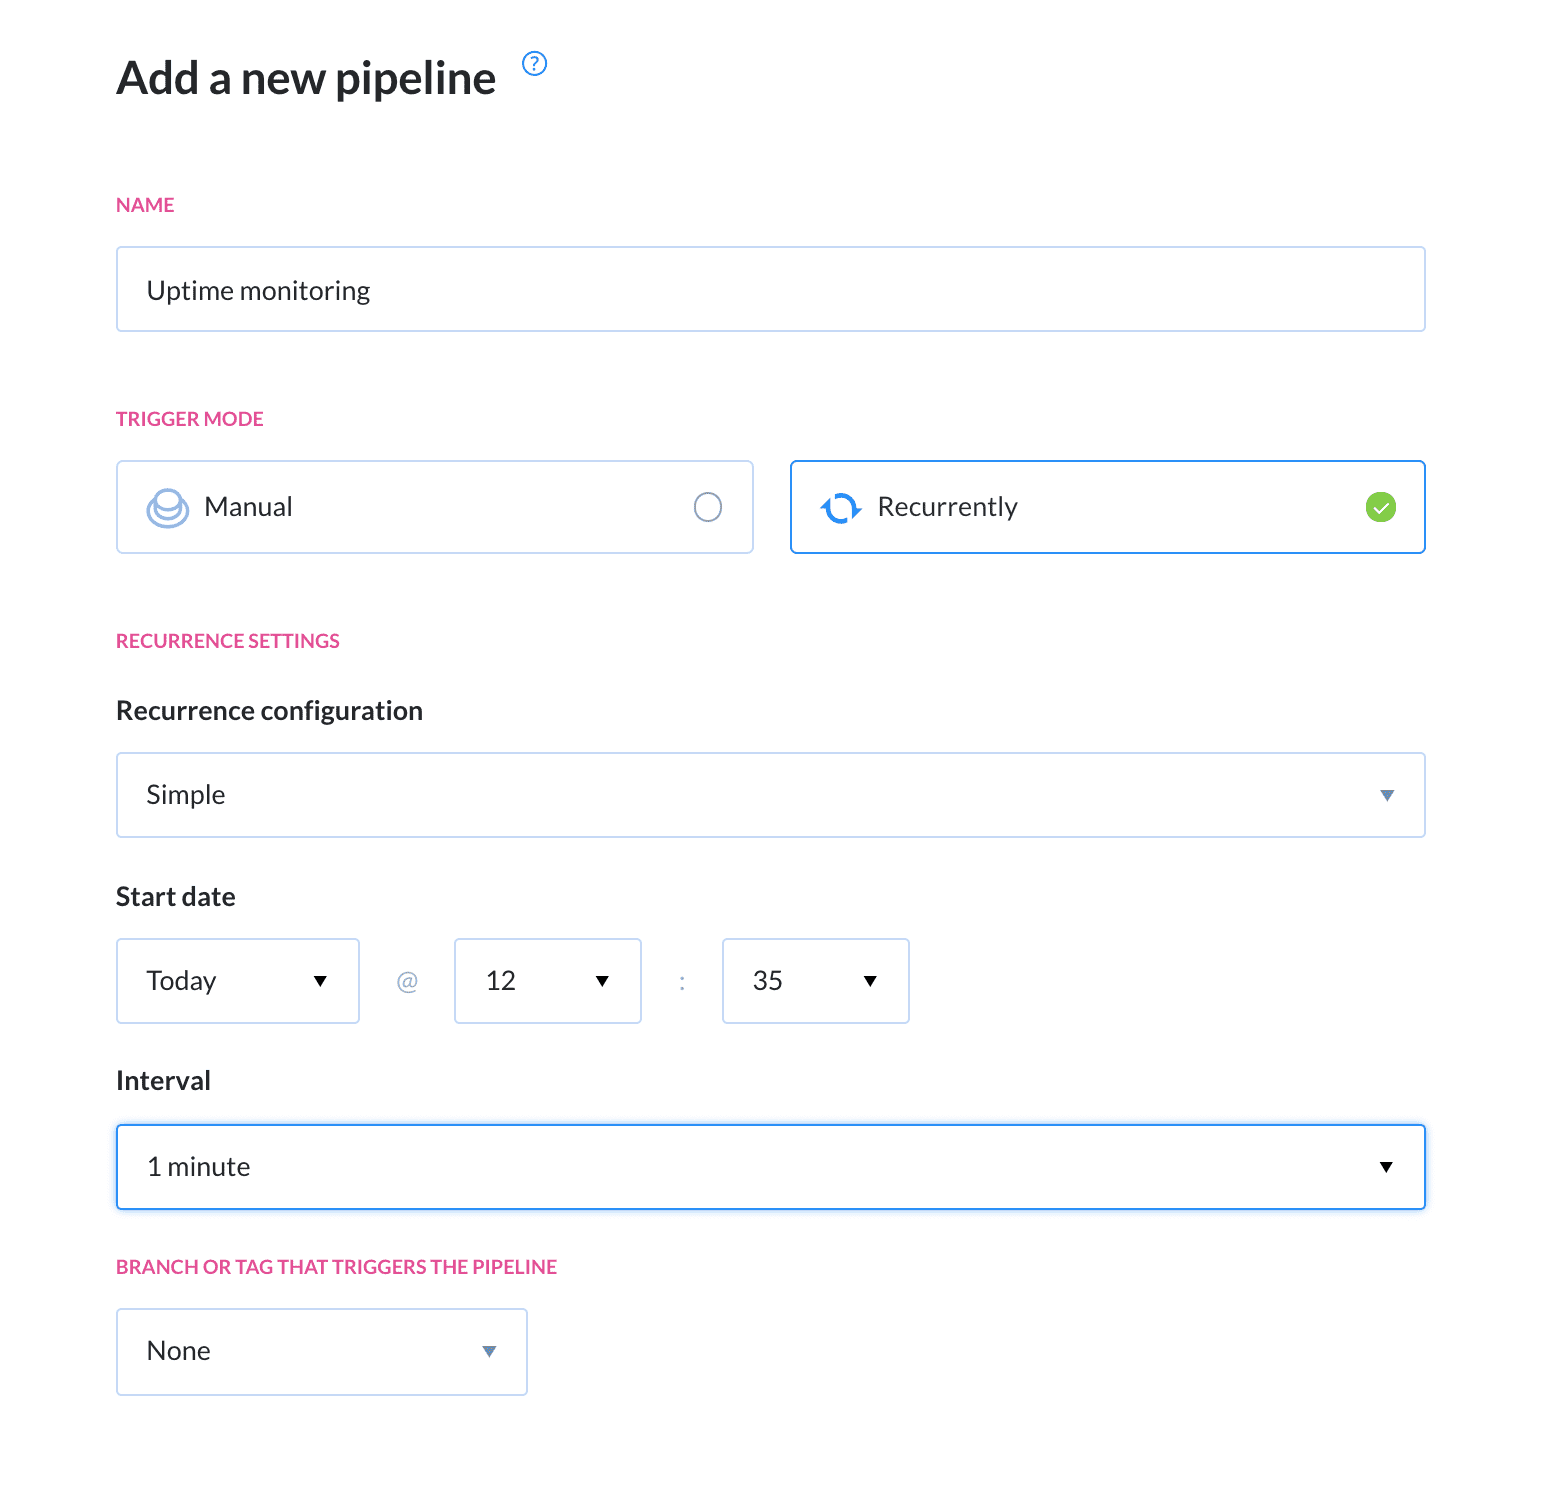 Pipeline settings configuration